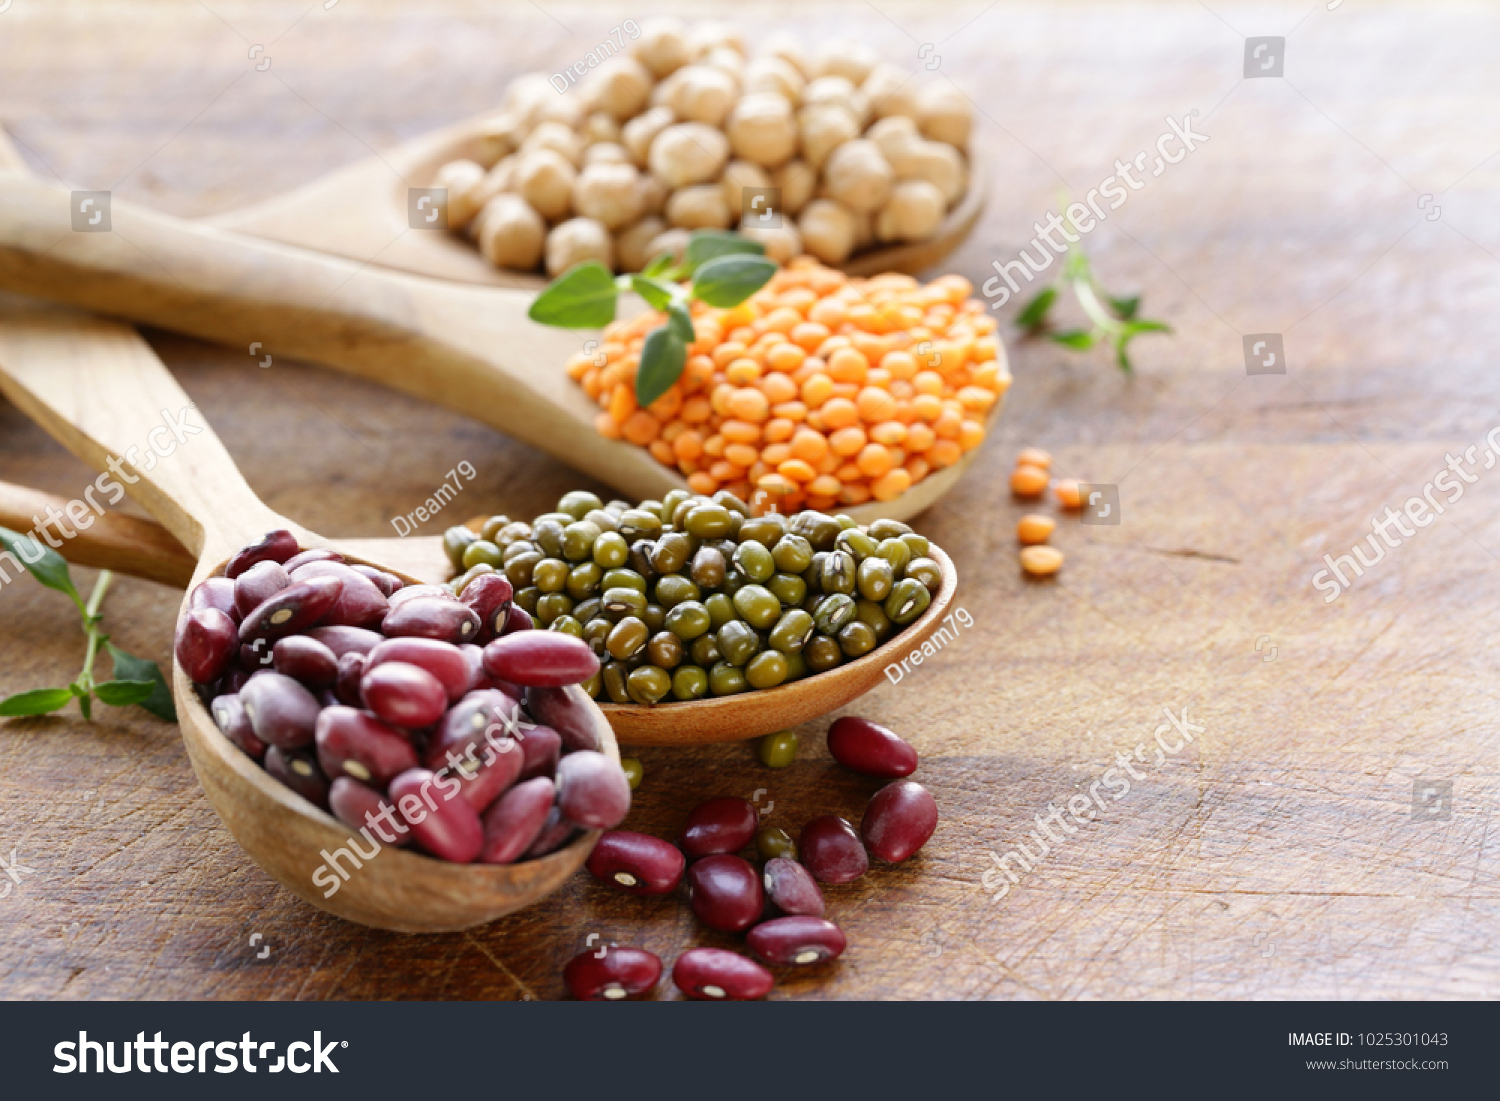 various kinds of legumes - beans, lentils, chickpeas, mung beans #1025301043